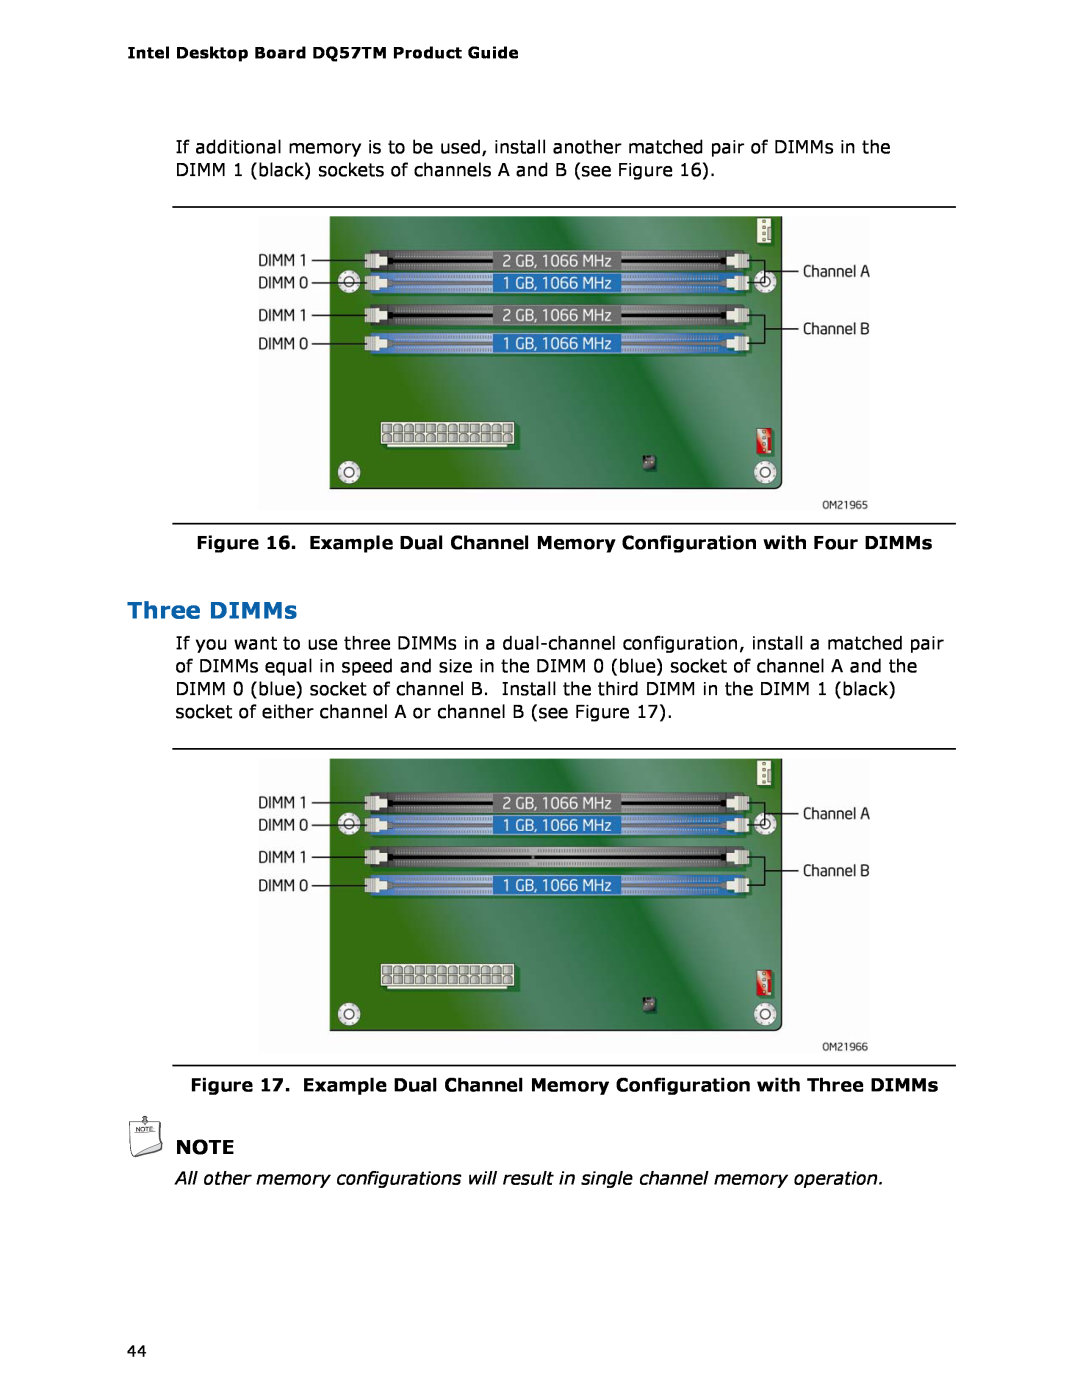 Intel DQ57TM manual Three DIMMs 